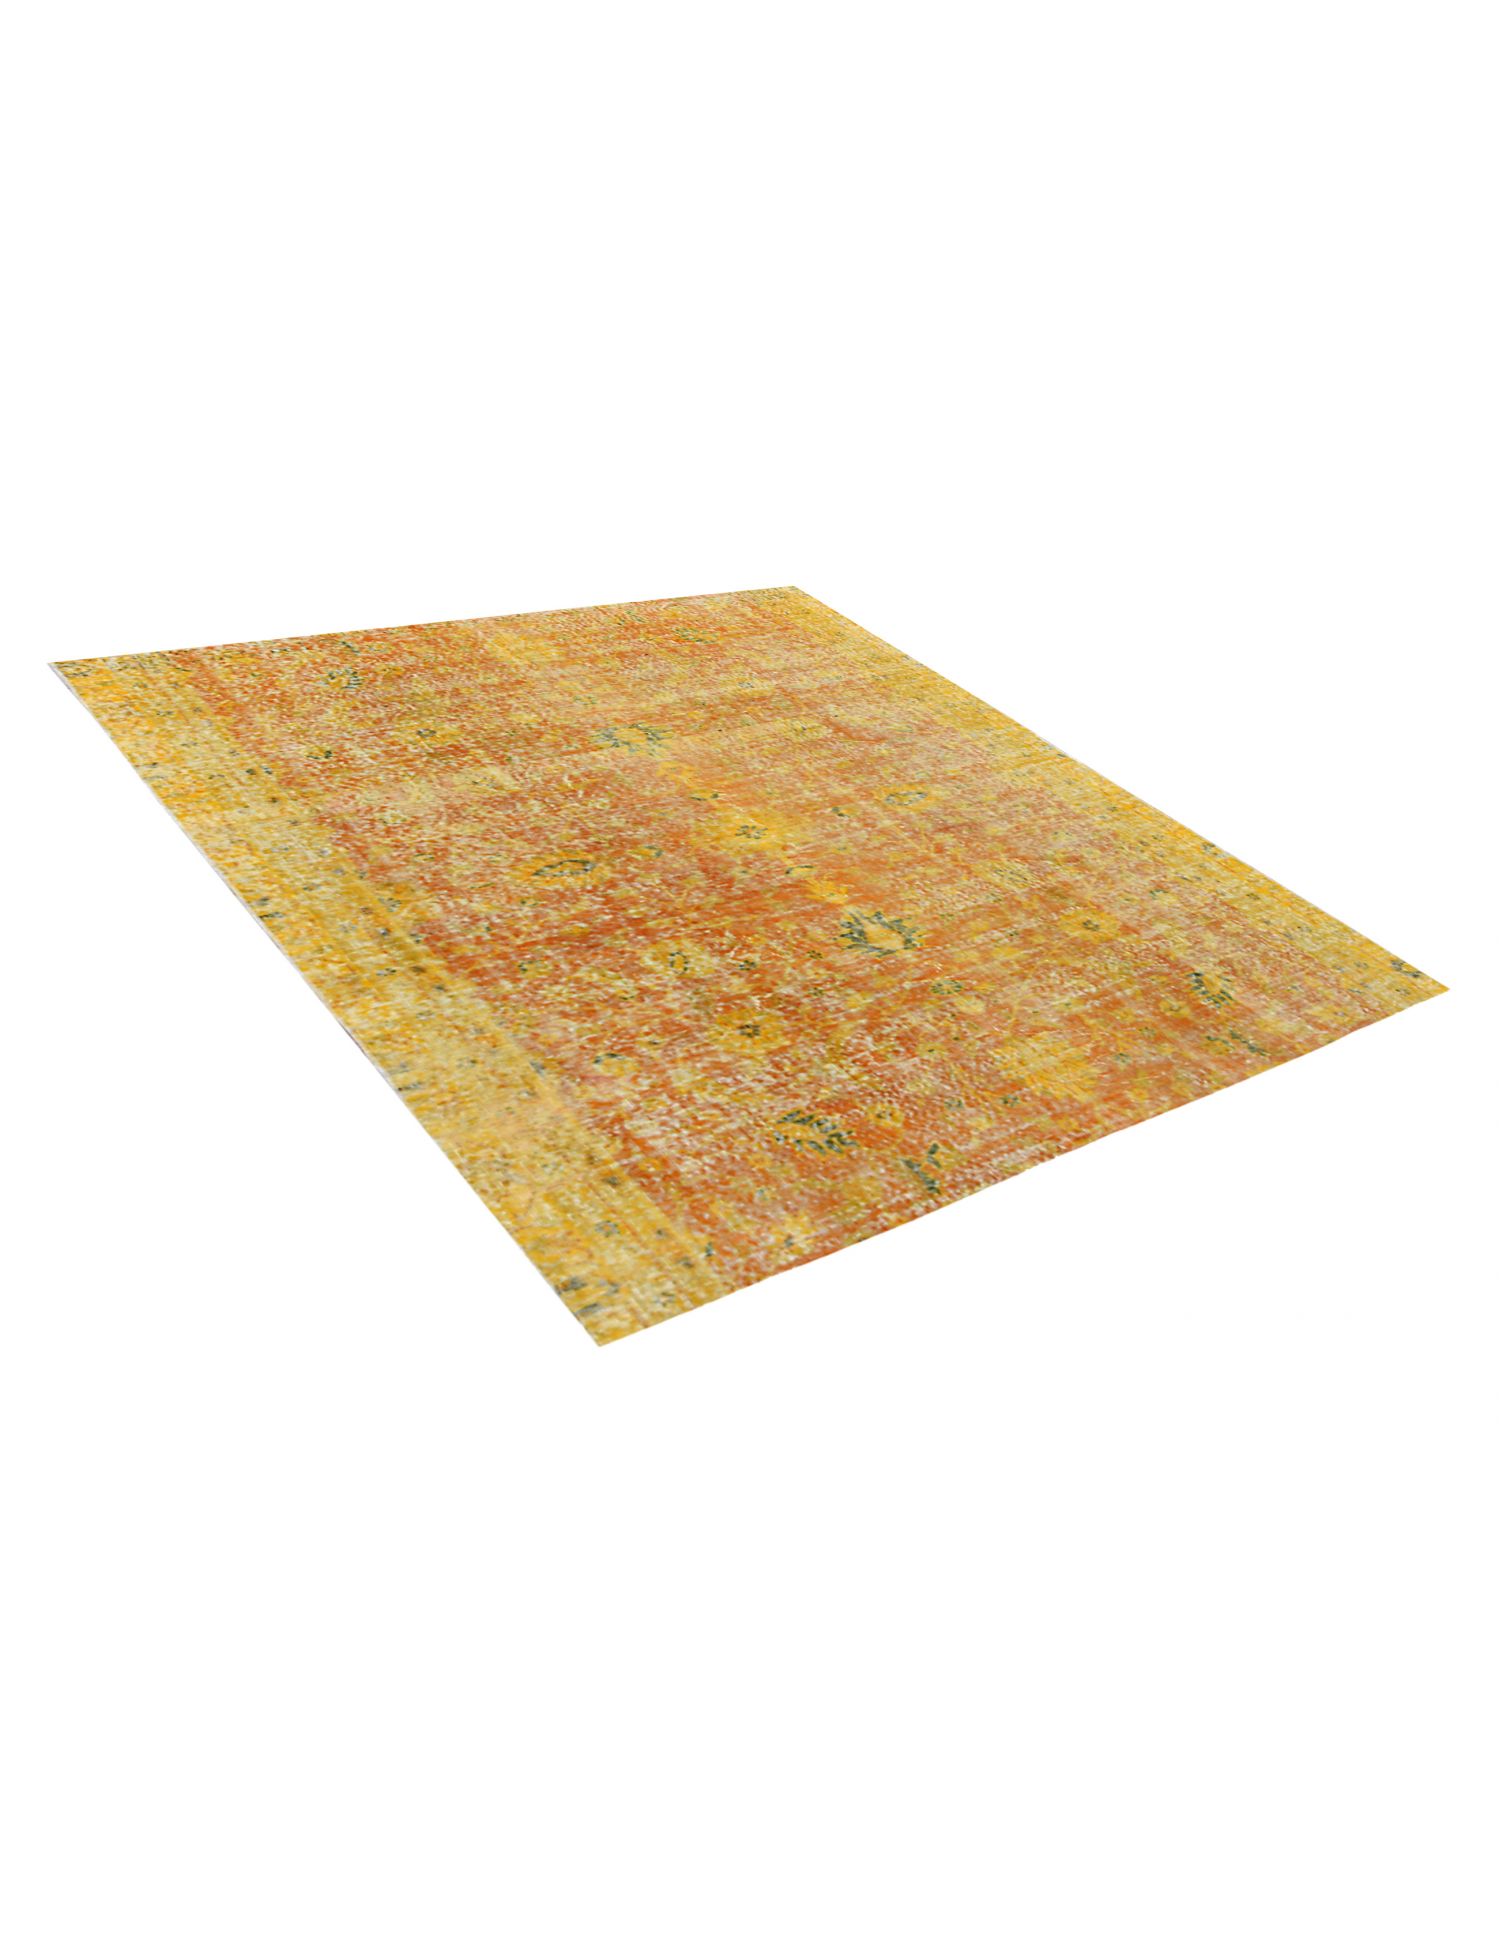 Quadrat Vintage Teppich  gelb <br/>177 x 177 cm